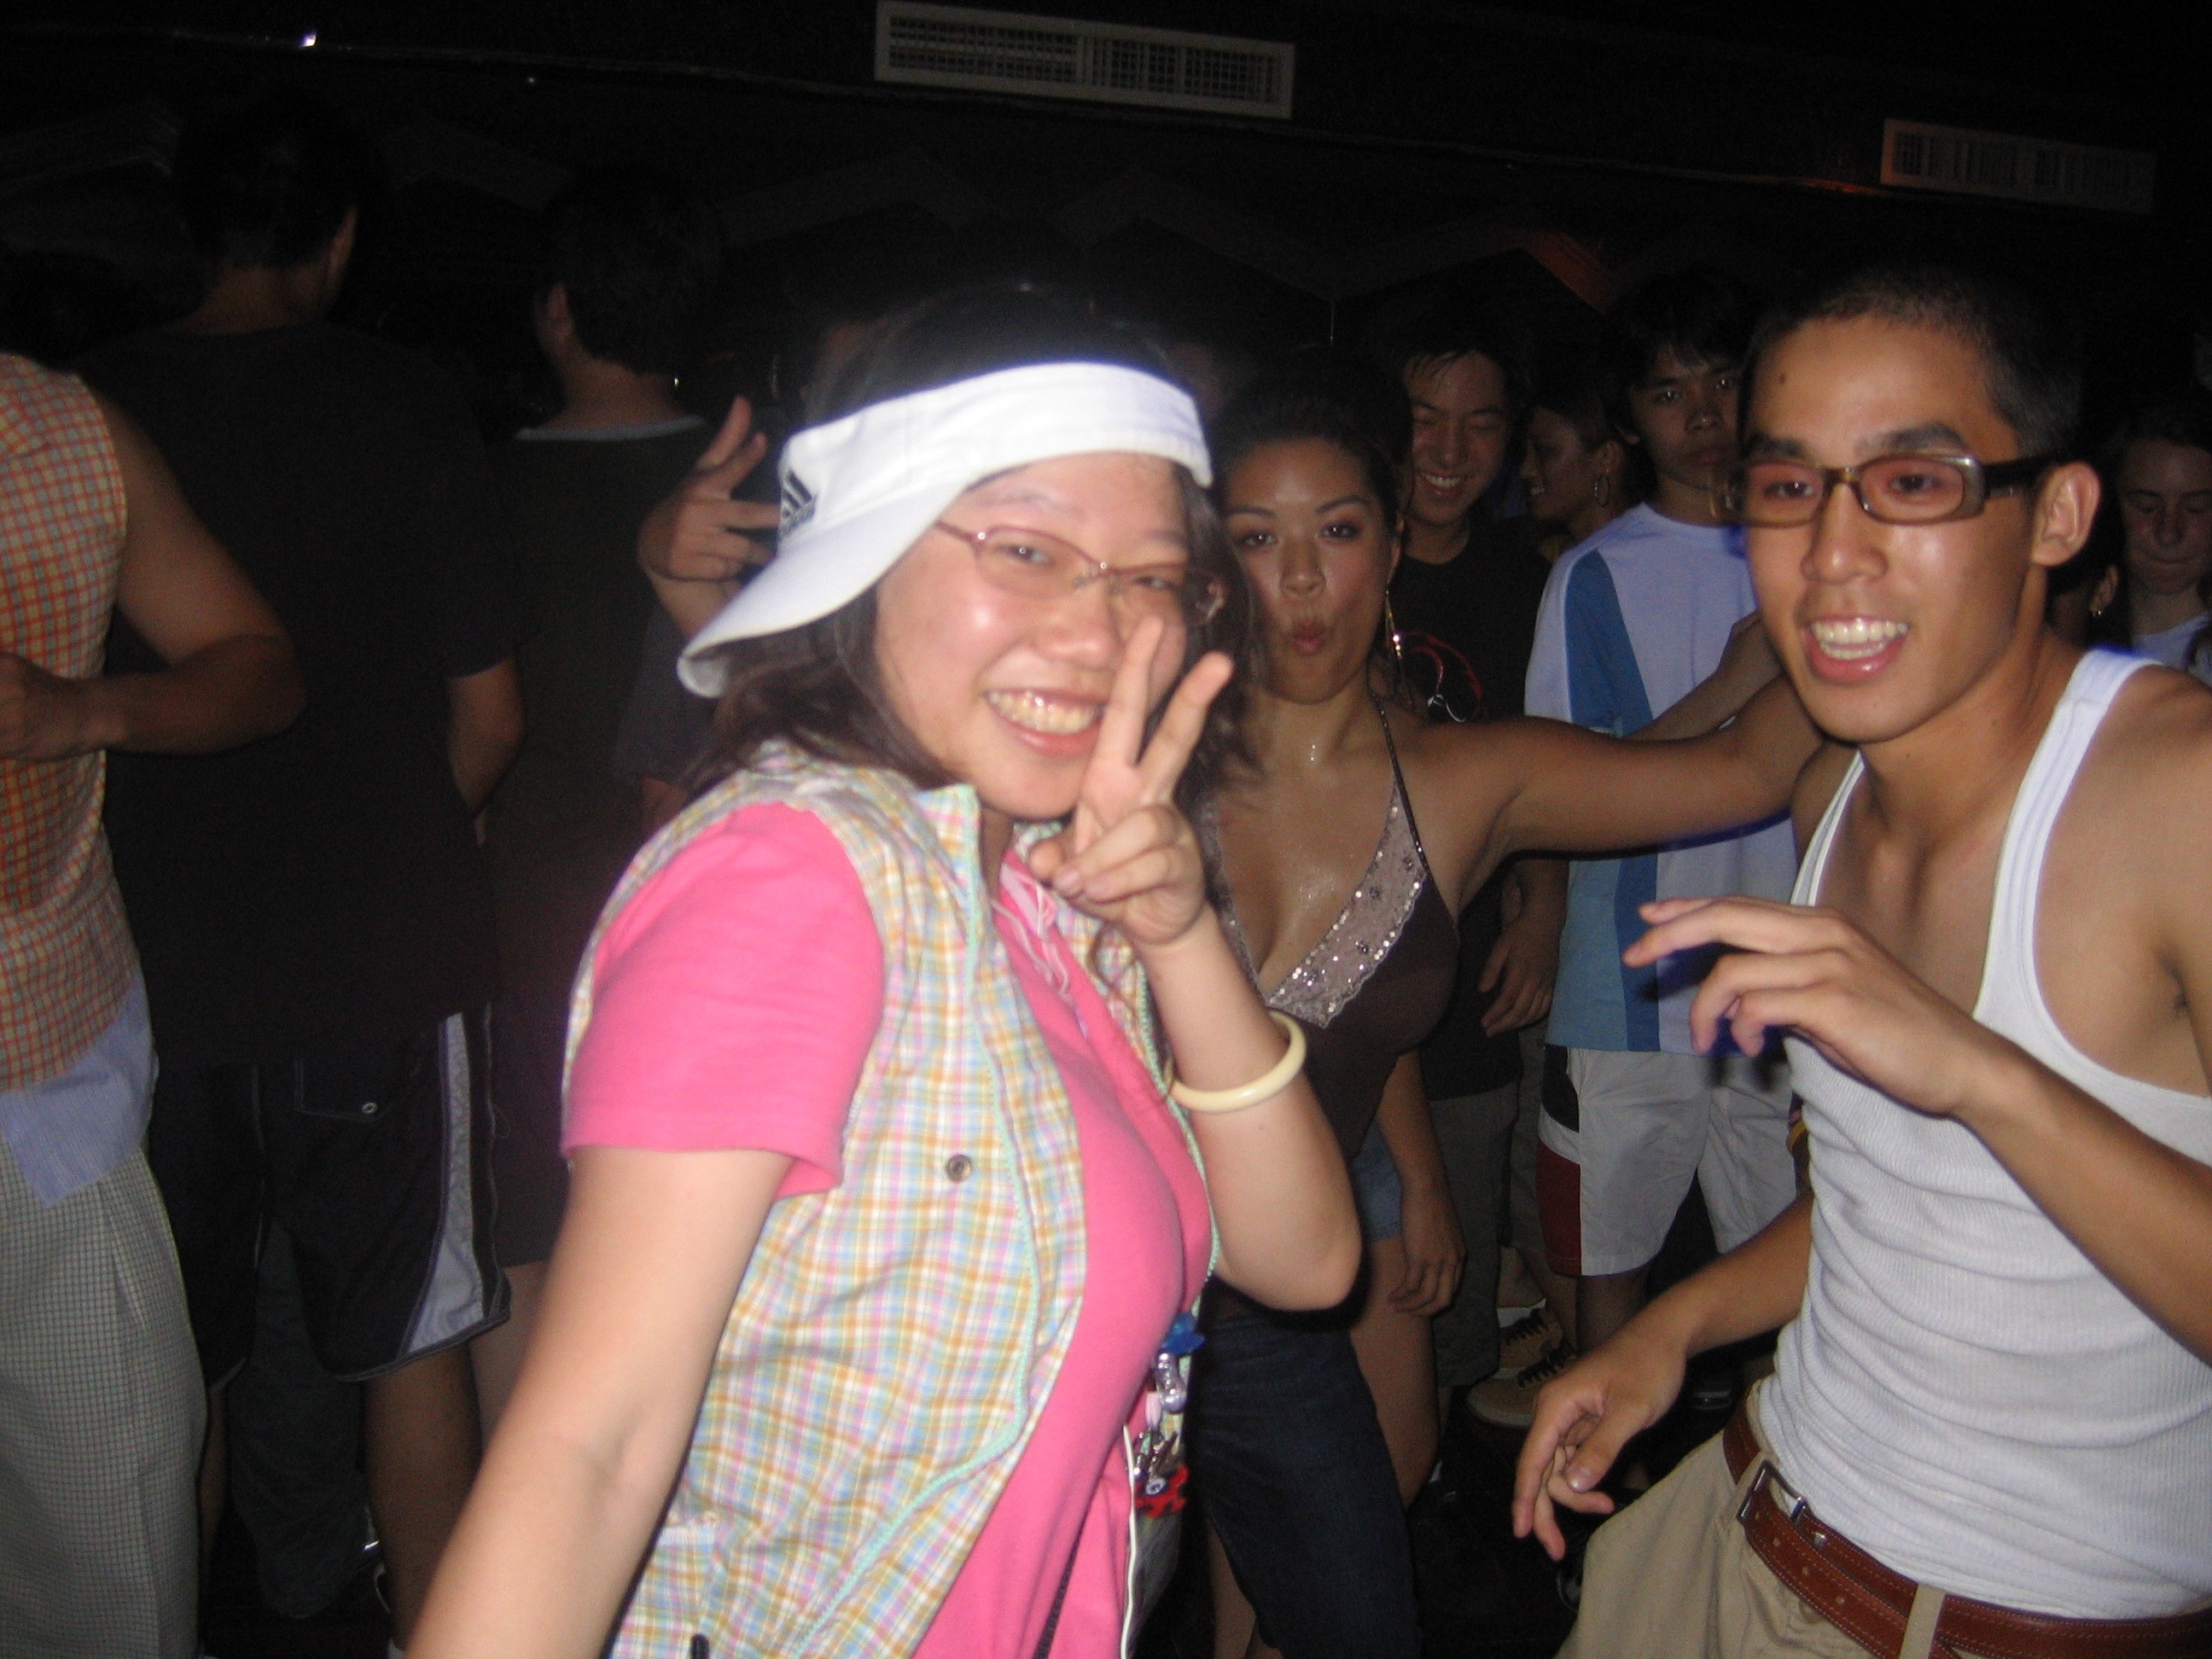 A Love Boat Taiwan disco in 2006, Taiwan. Photo: Love Boat: Taiwan (2019), by Valerie Soe